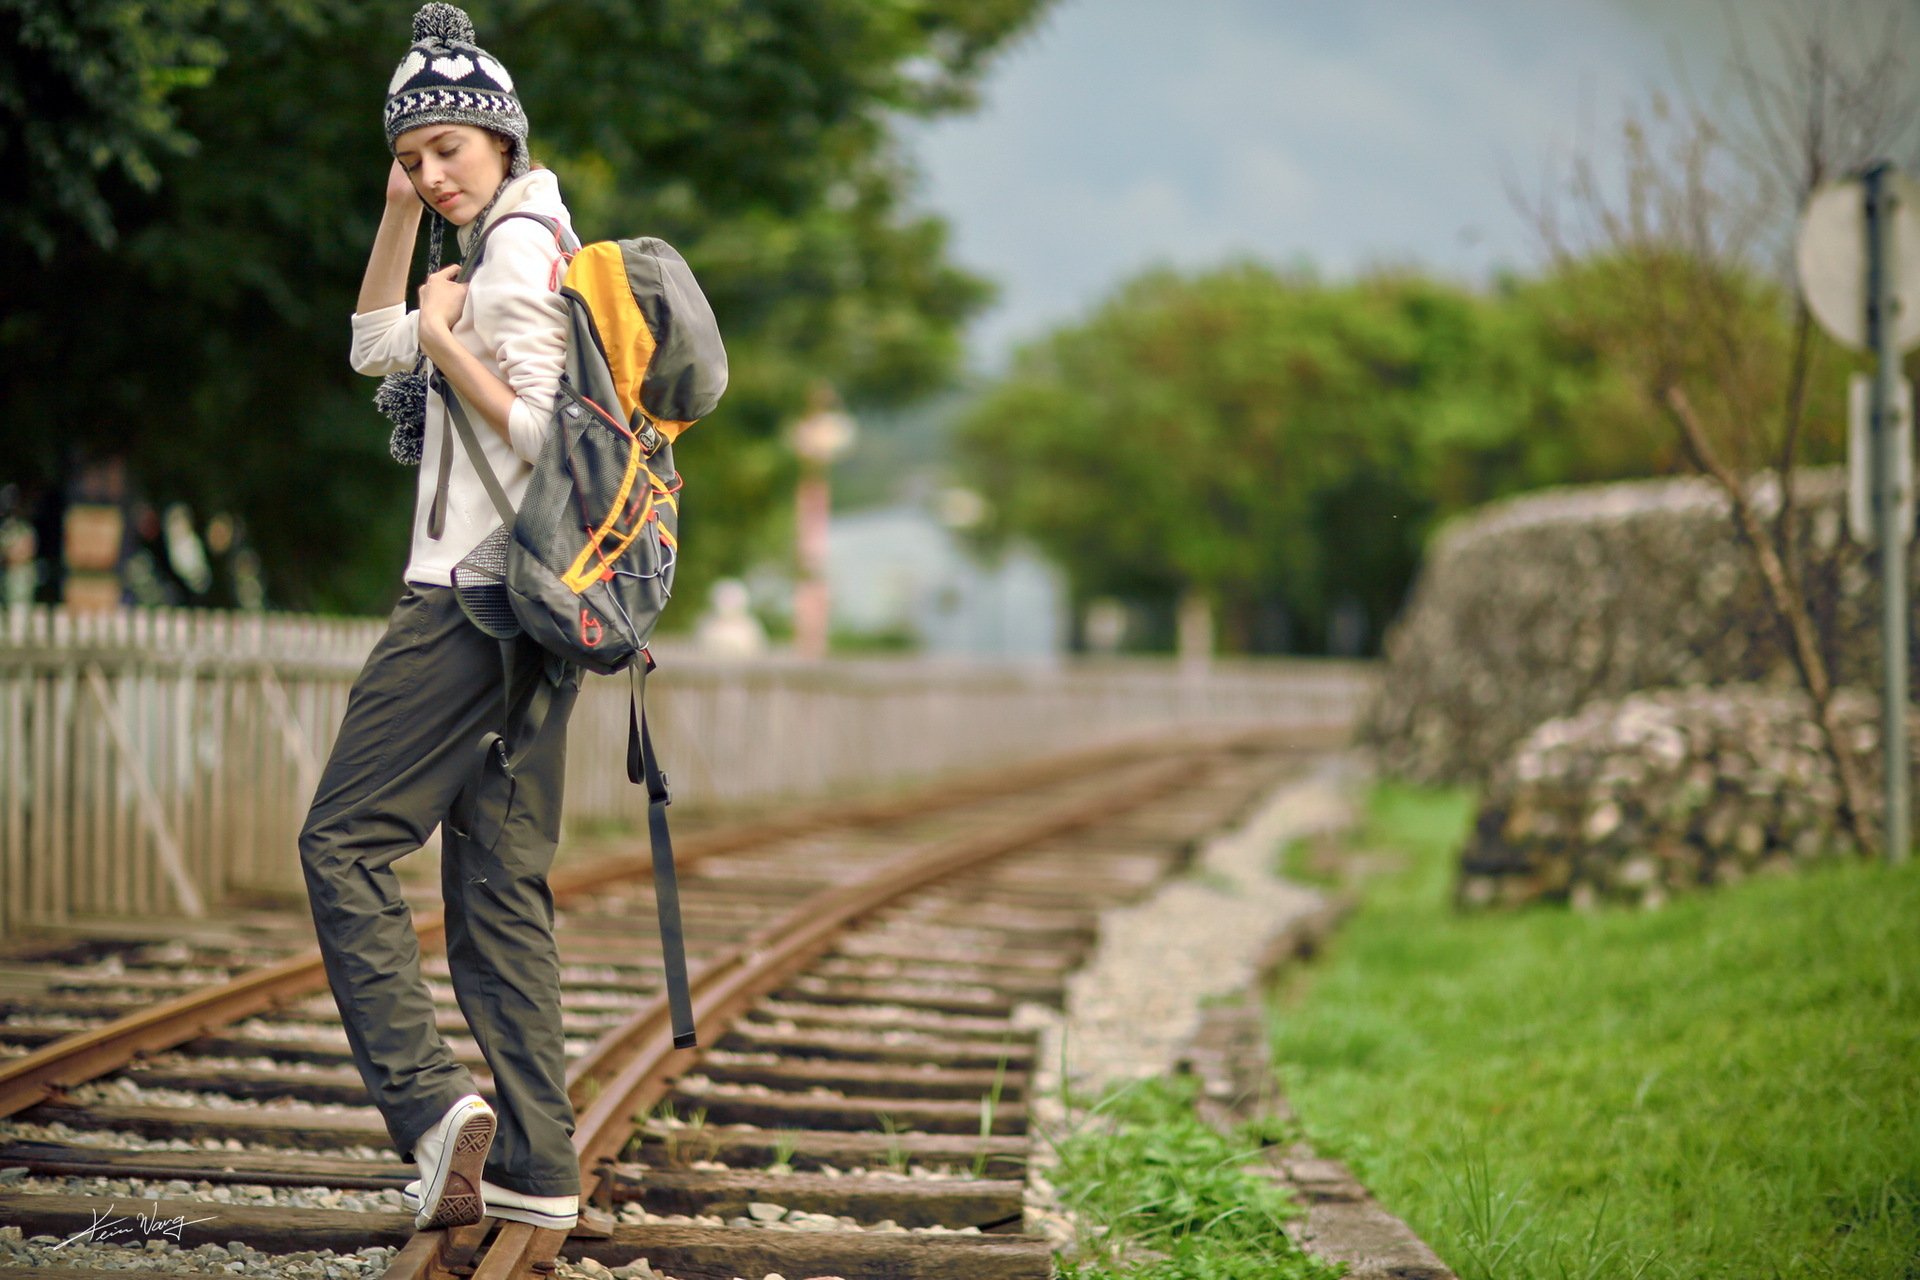 Трип жд. Фотосессия на железнодорожных путях. Человек на железной дороге. Фотосессия на рельсах мужчина.